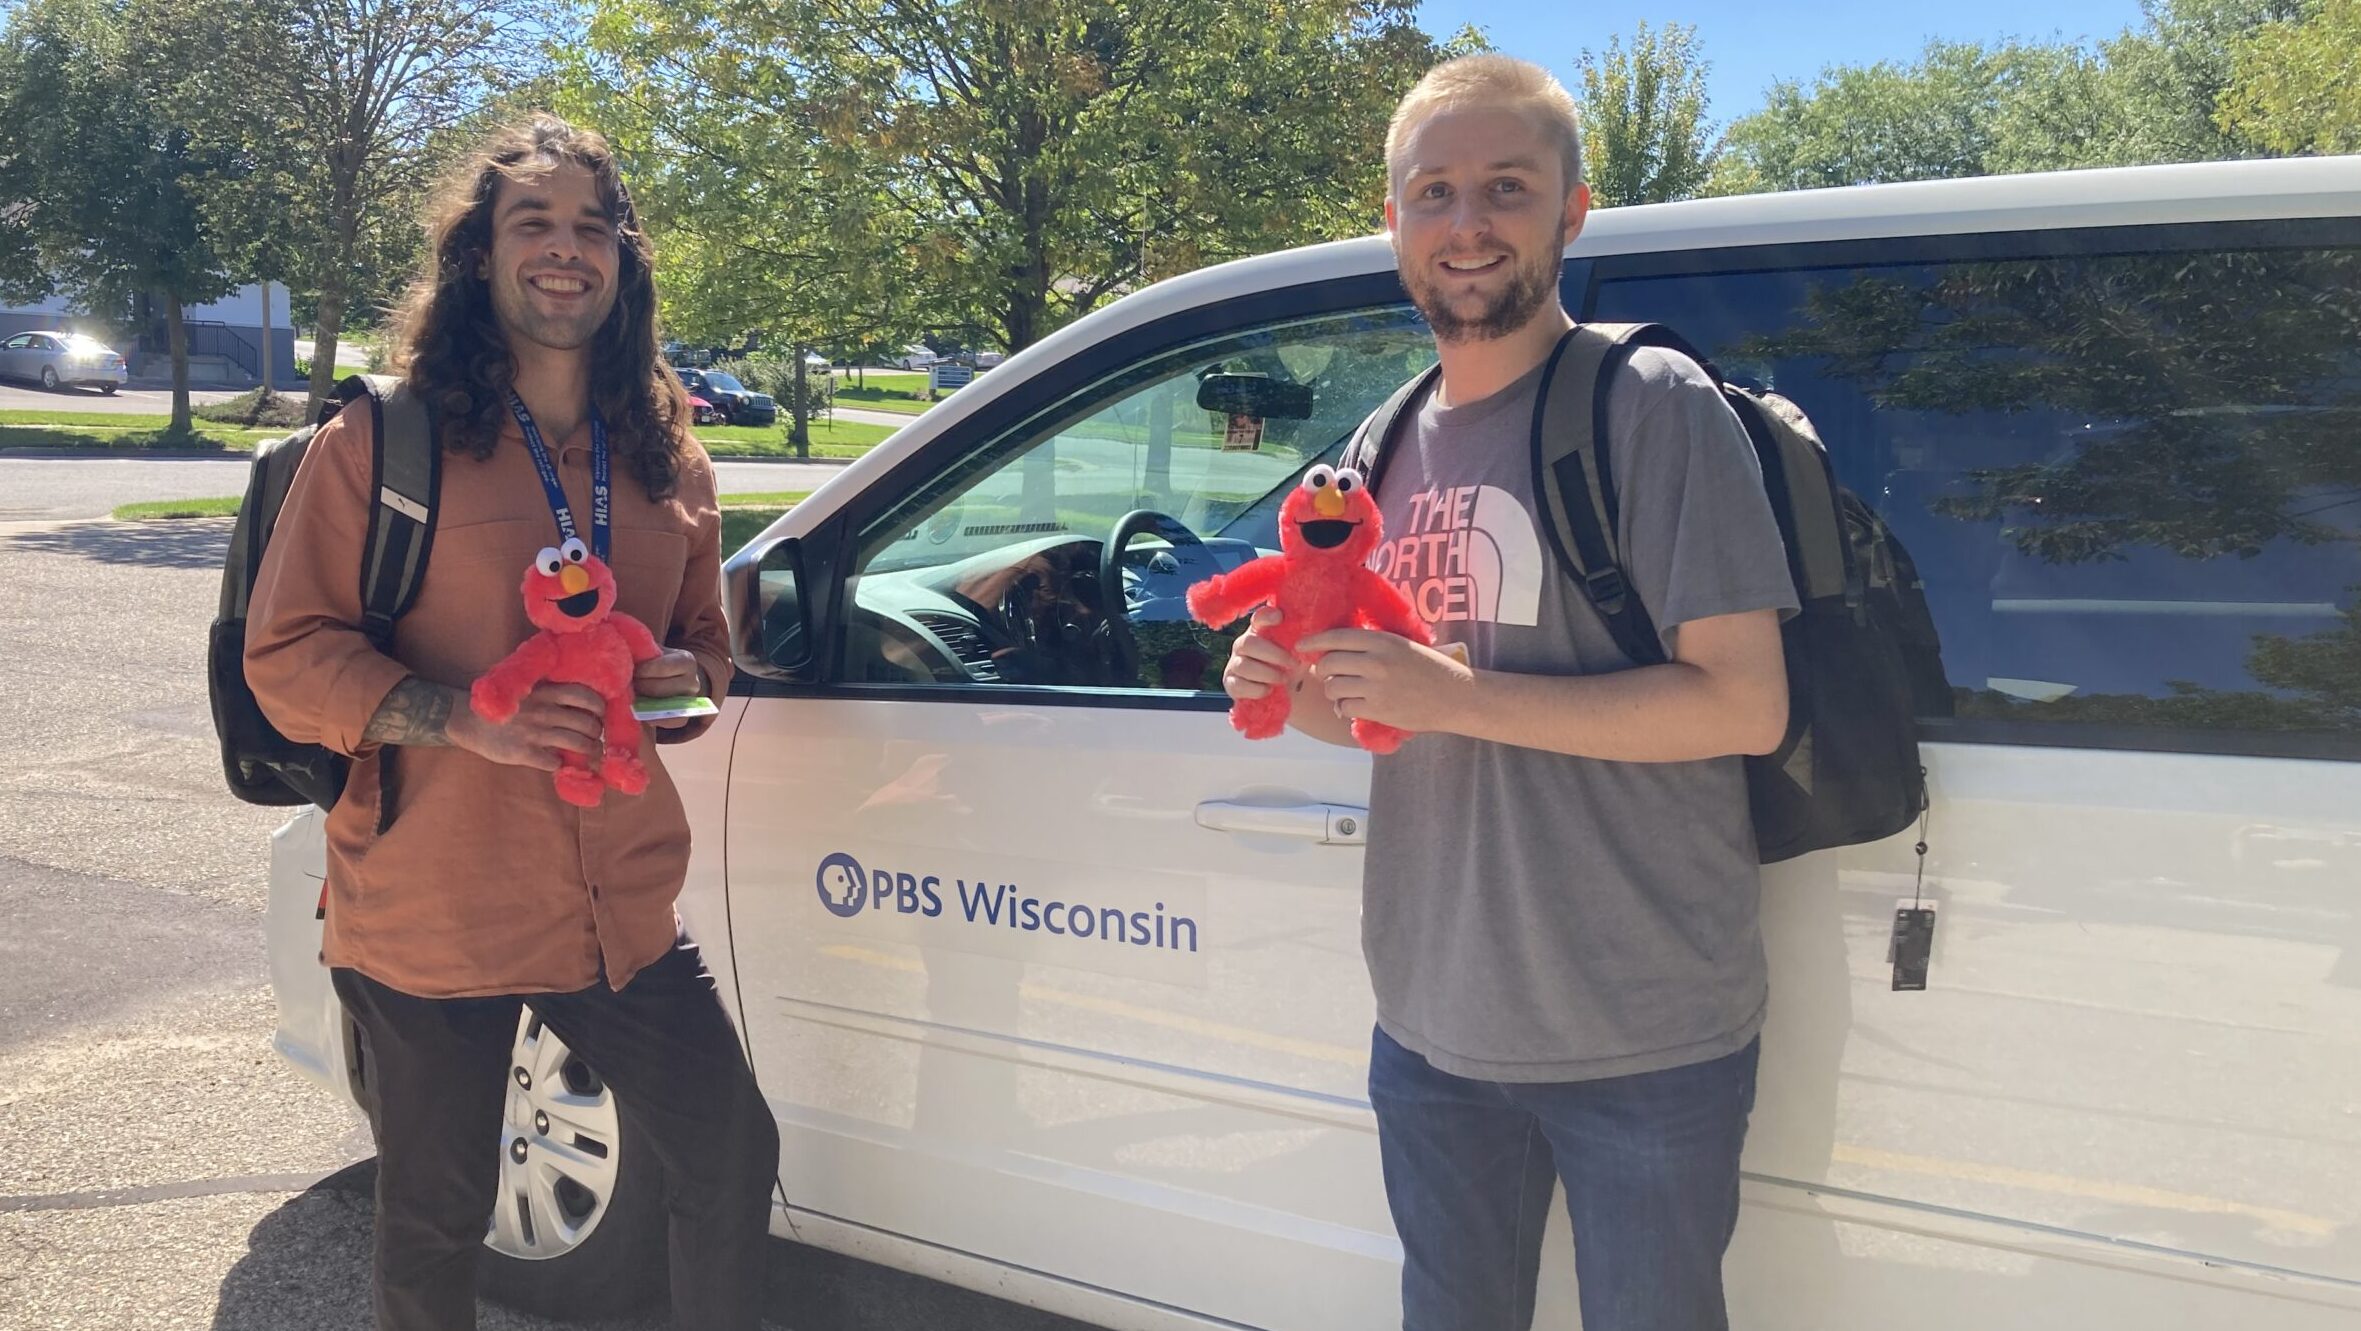 two men holding Elmo stuffed animal, standing by PBS Wisconsin van